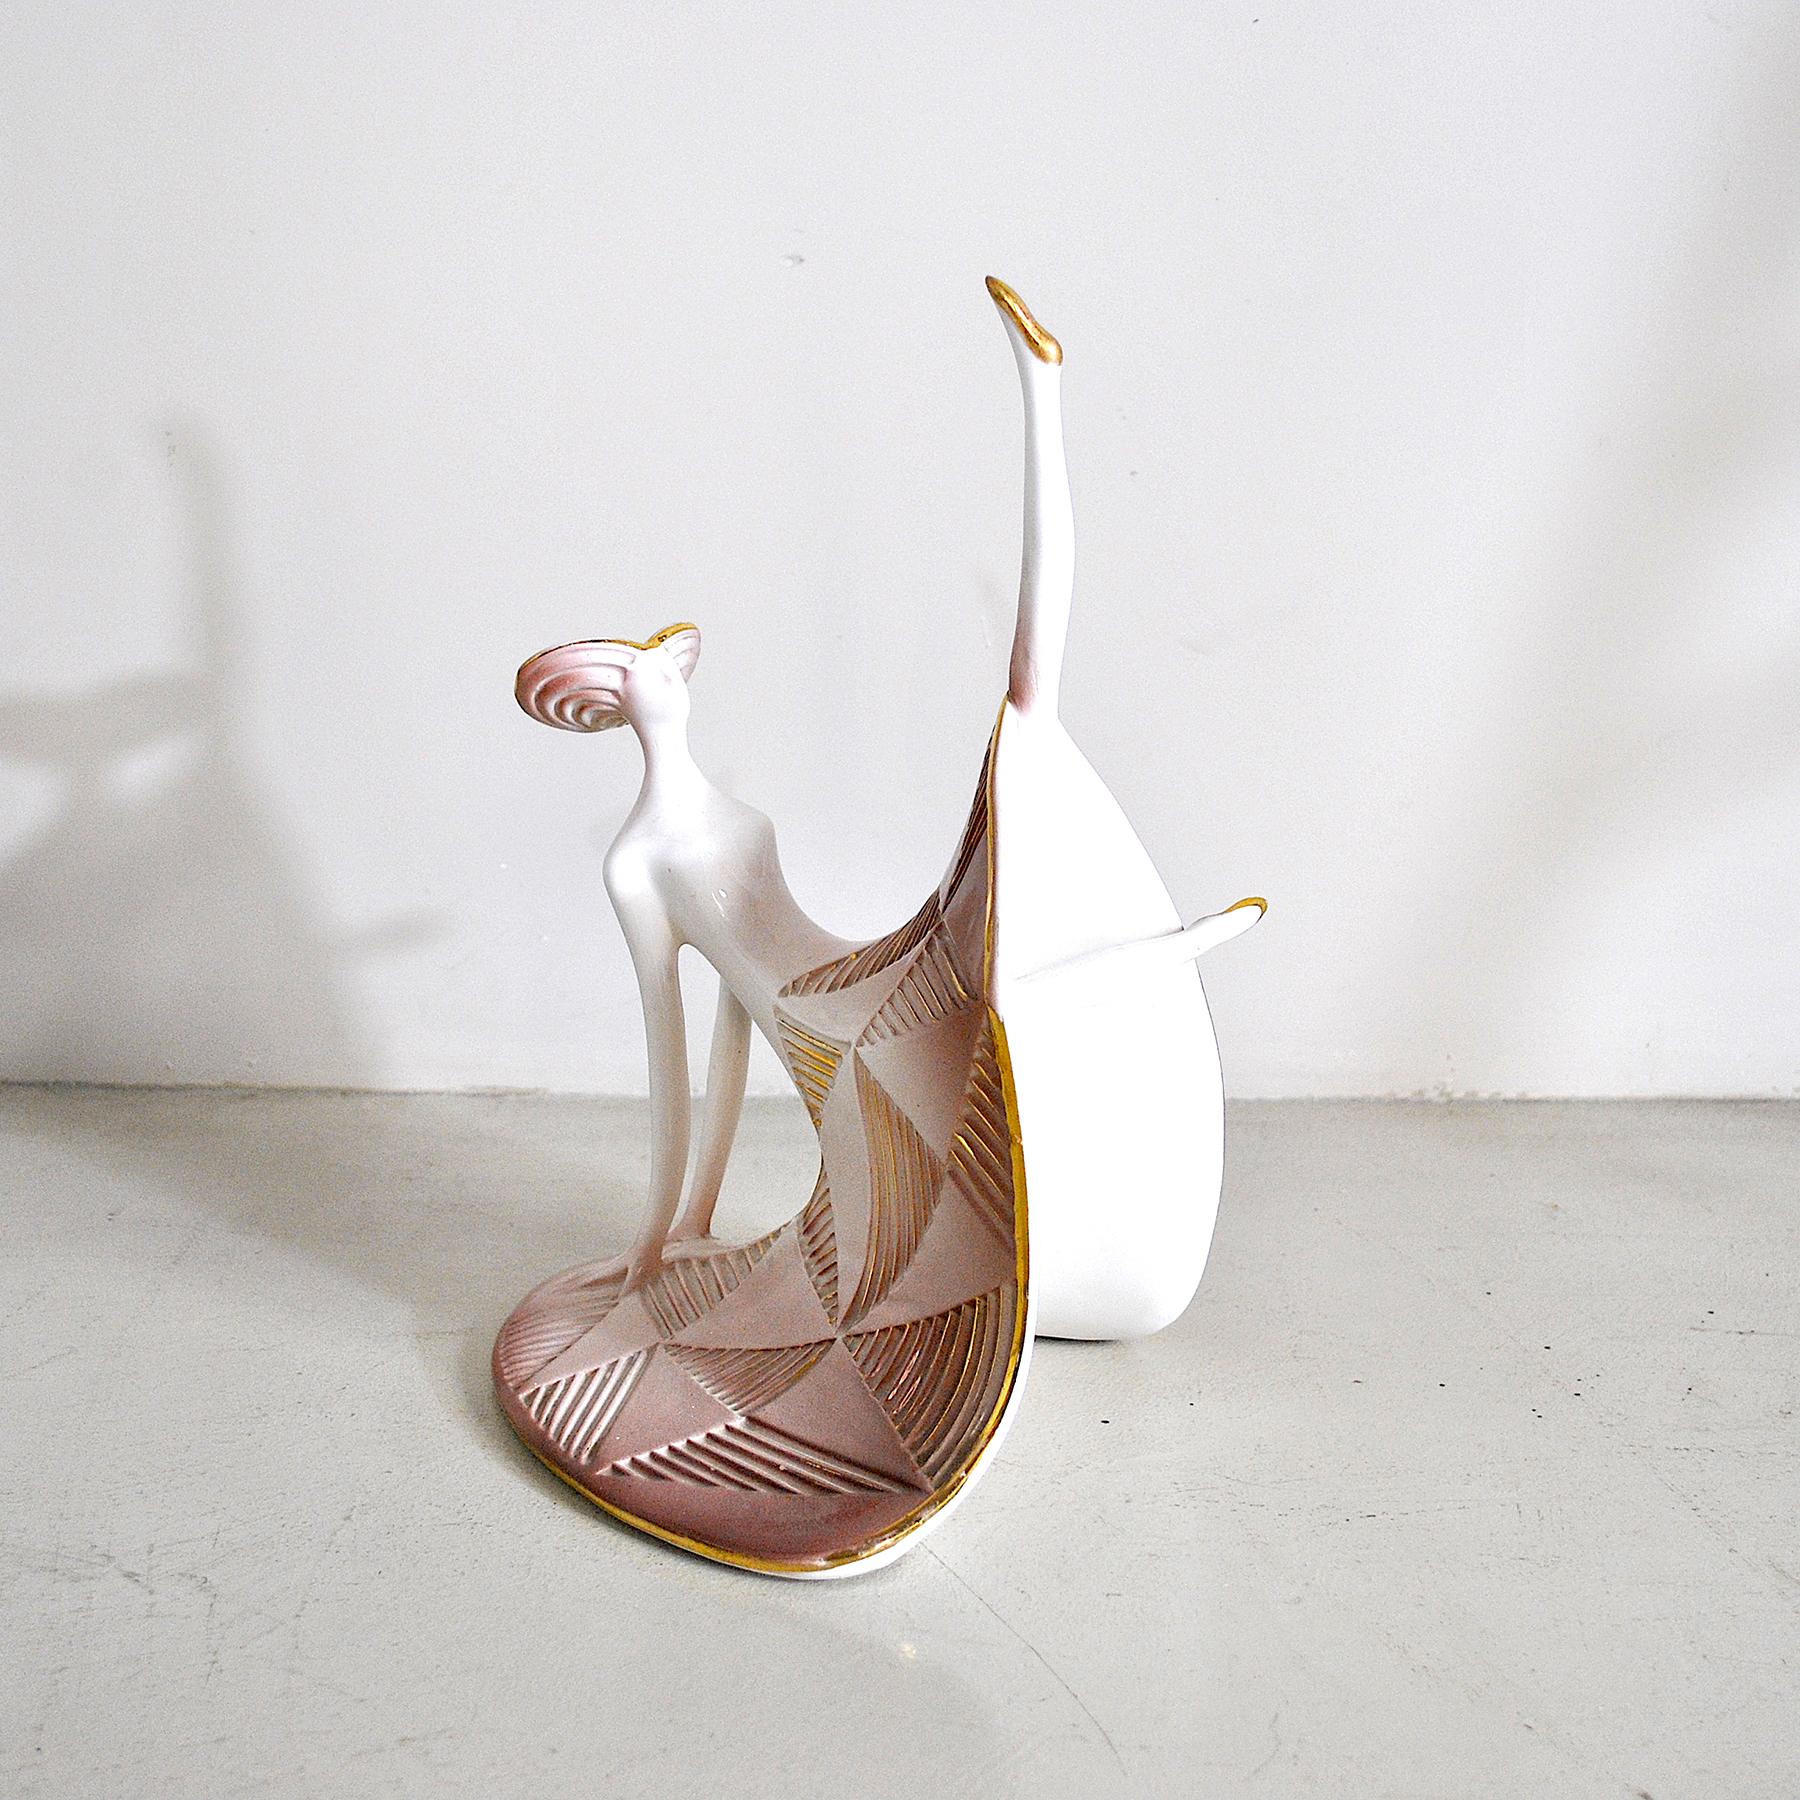 Polychrome ceramic sculpture from the 1930s depicting a futurist school dancer.